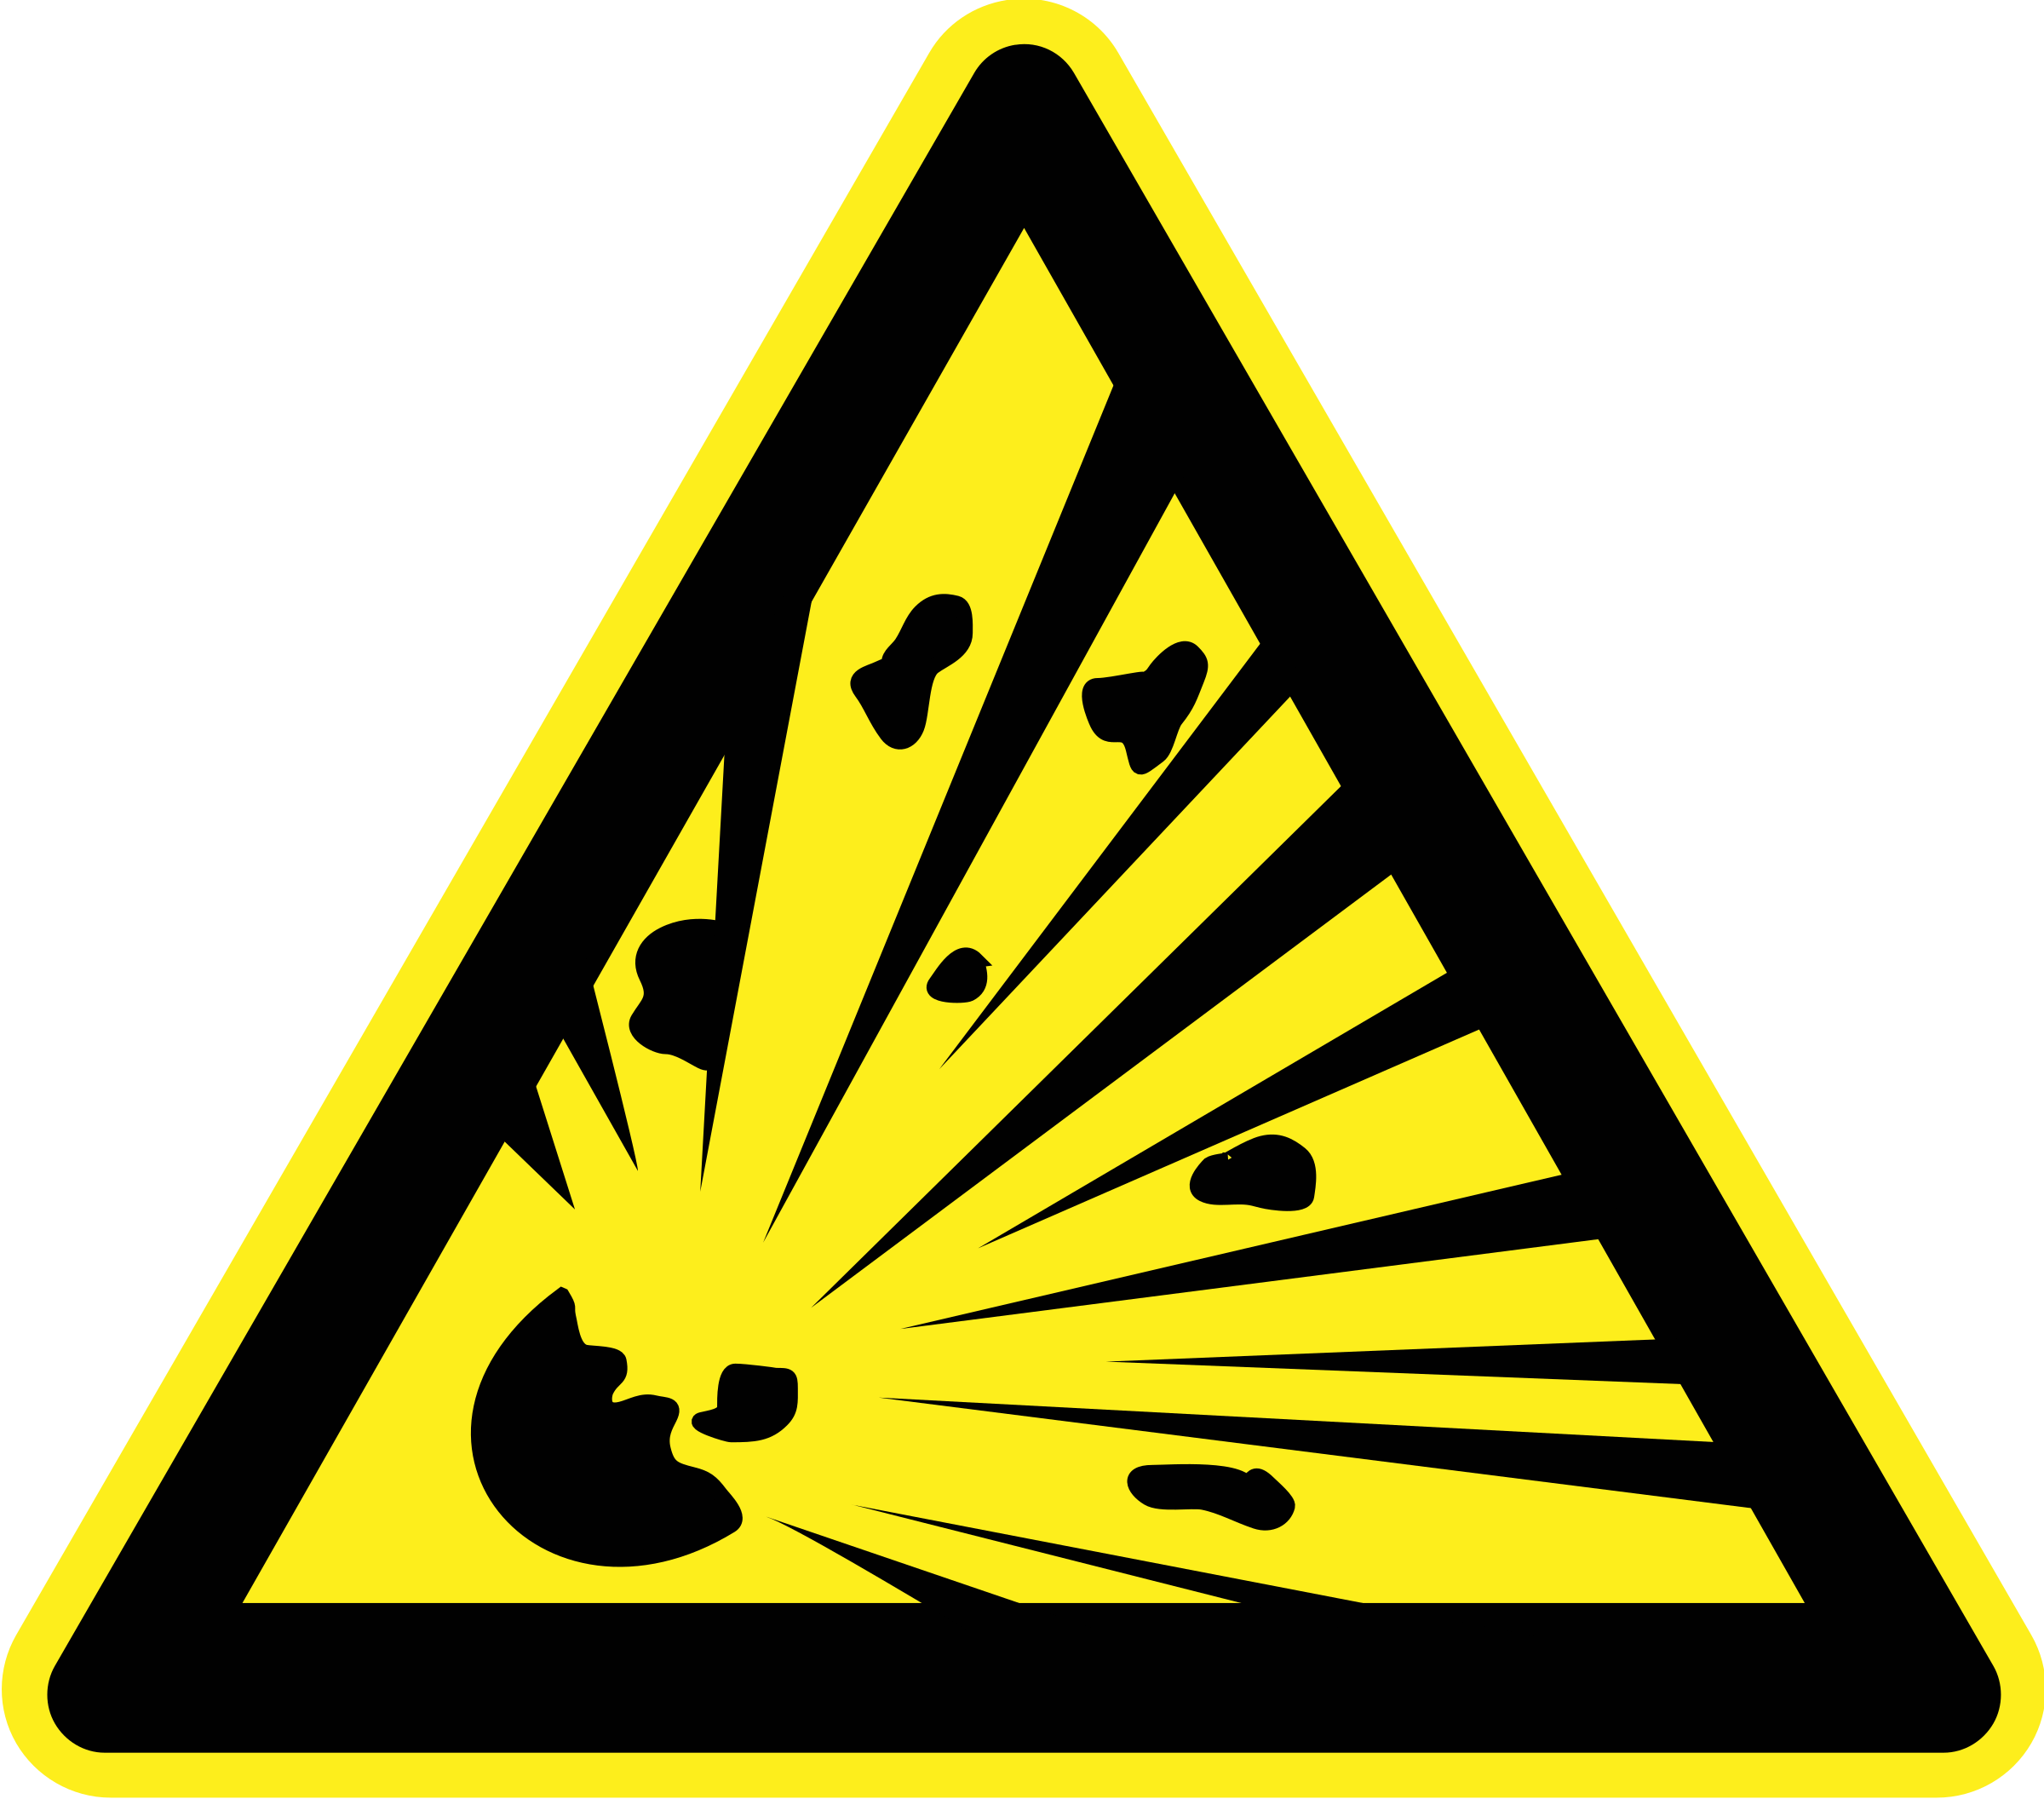 Explosive material warning sign. Triangular clipart hazard